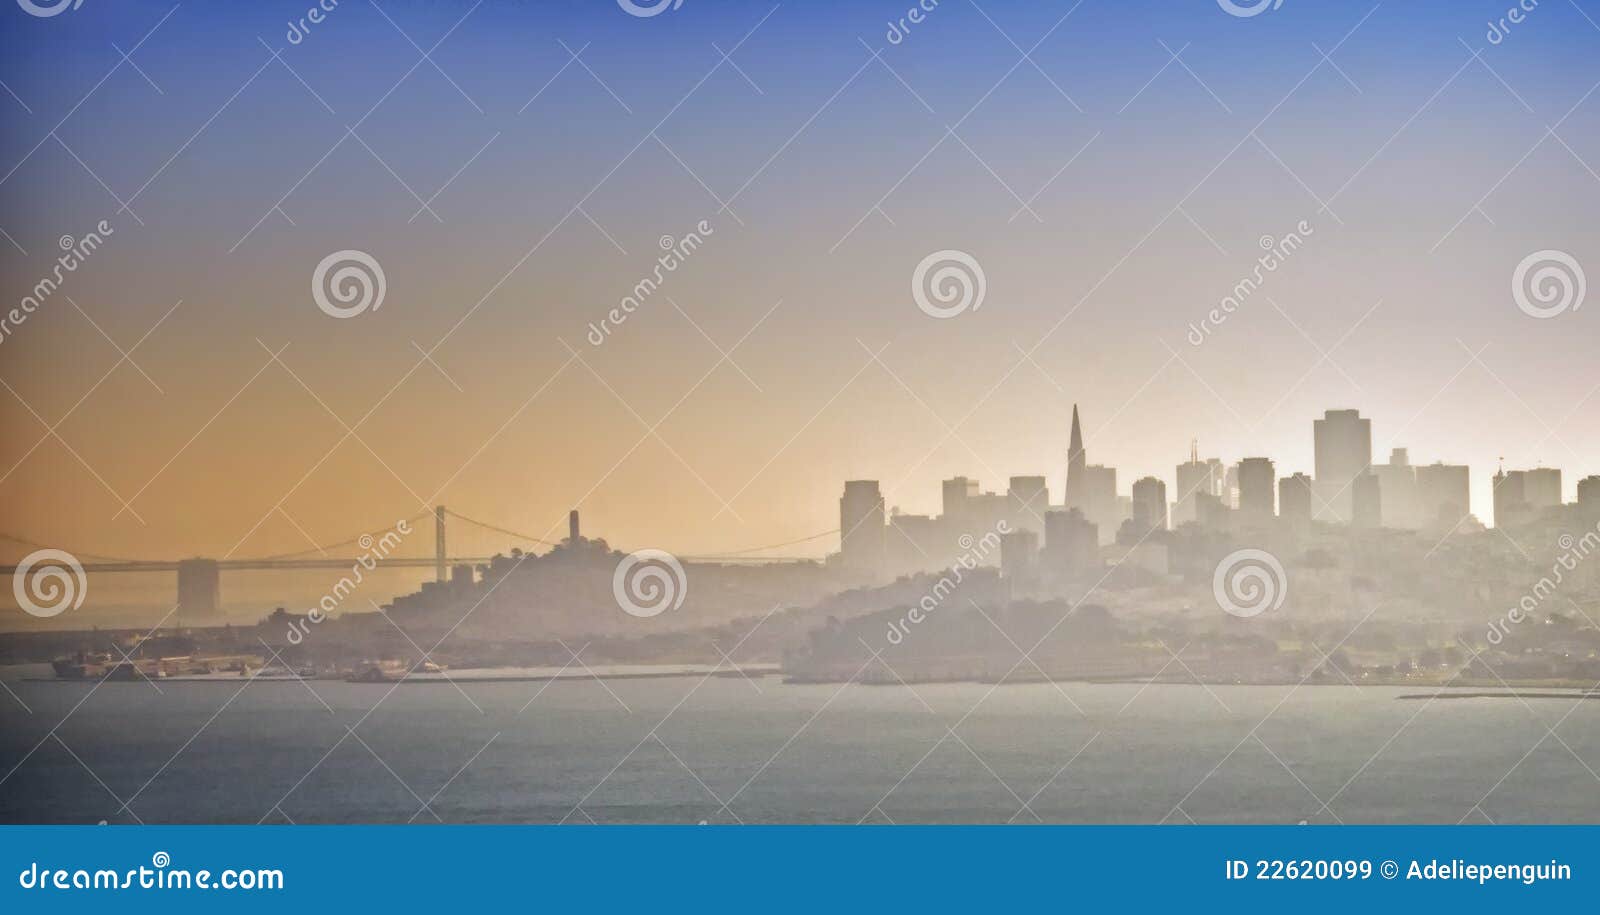 san francisco skyline in fog, california